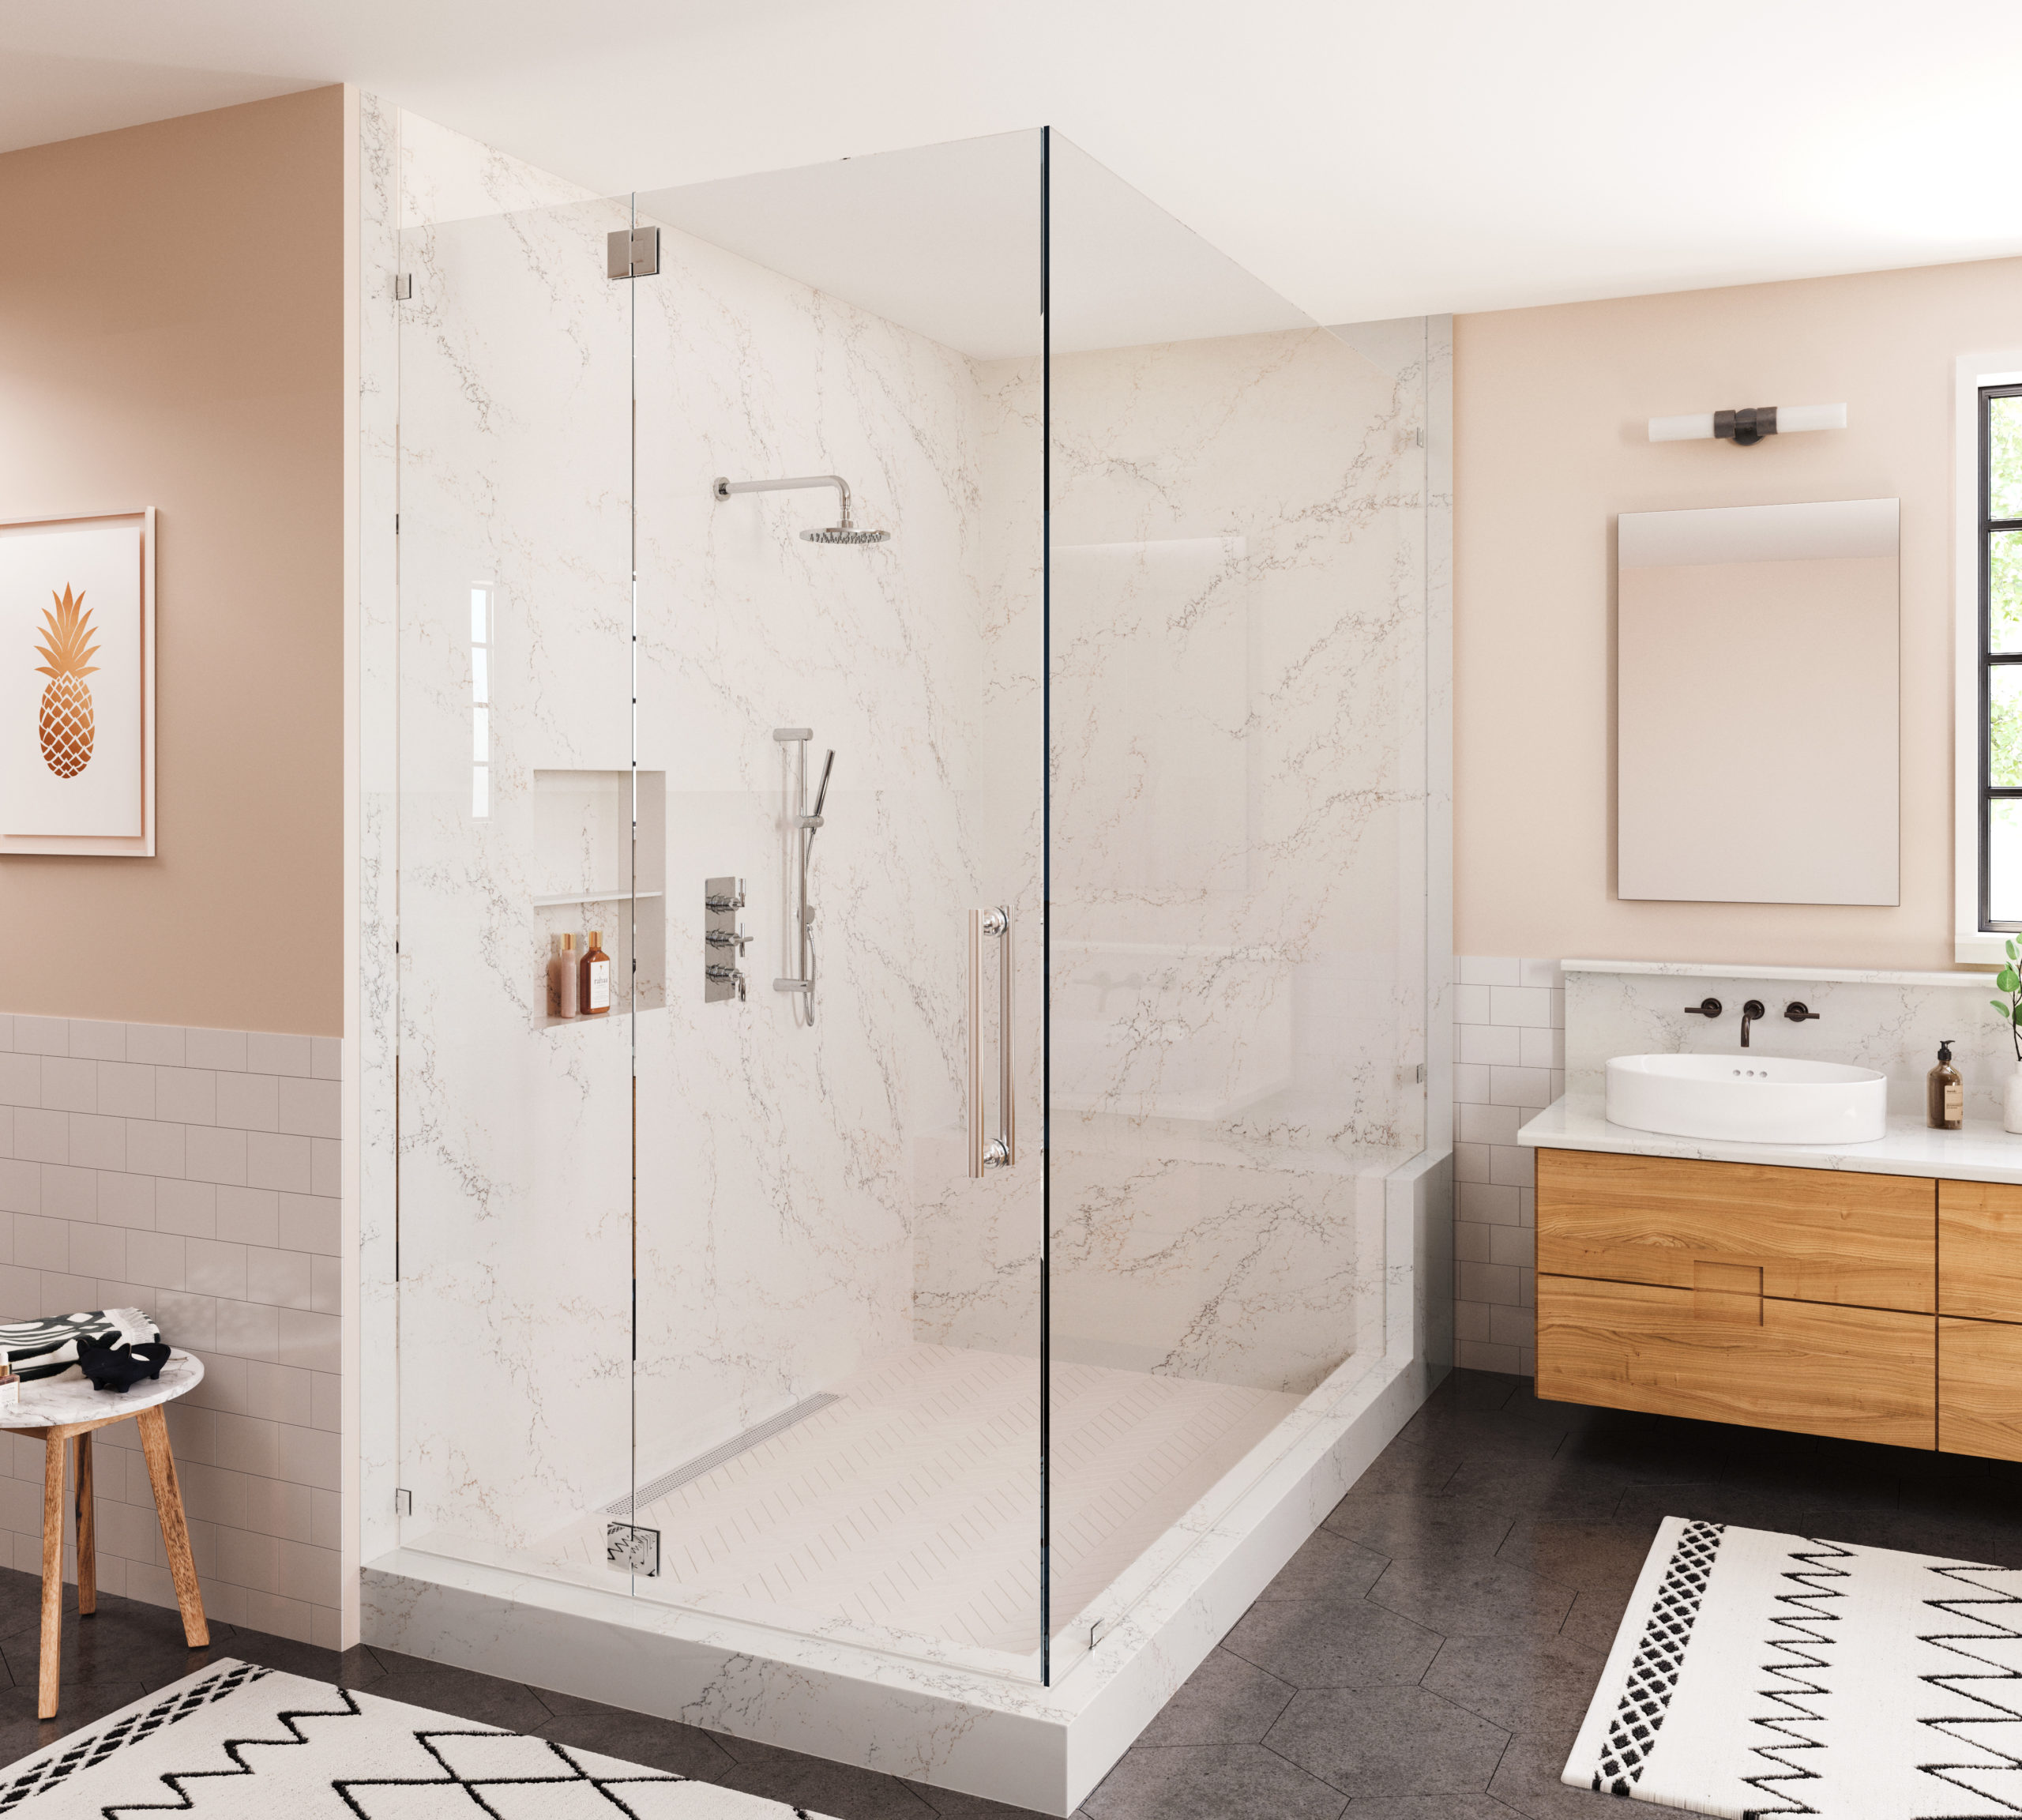 Sample bathroom walls design made of Cambria quartz